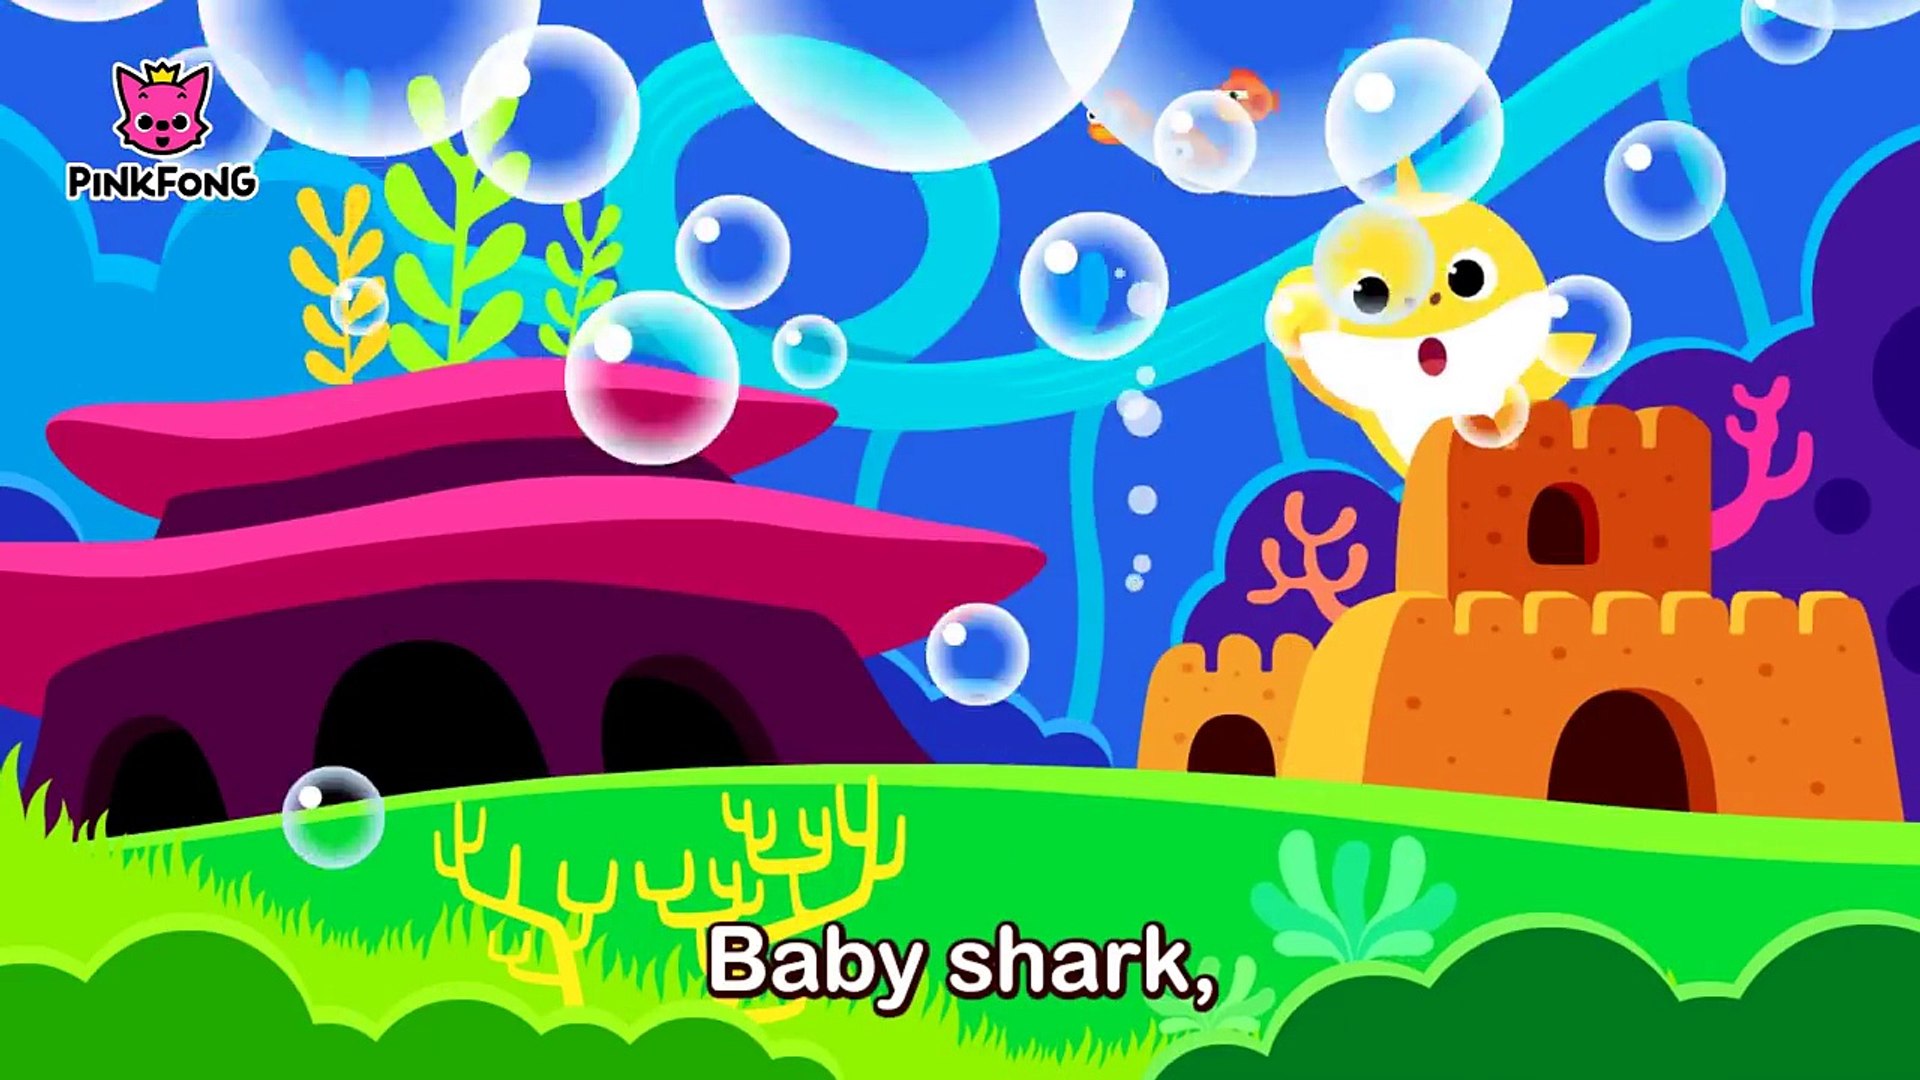 Be Happy With Baby Shark Doo Doo Doo Doo Doo Doo Animal Songs Pinkfong Songs For Children 3bcnxw3hkyg Video Dailymotion